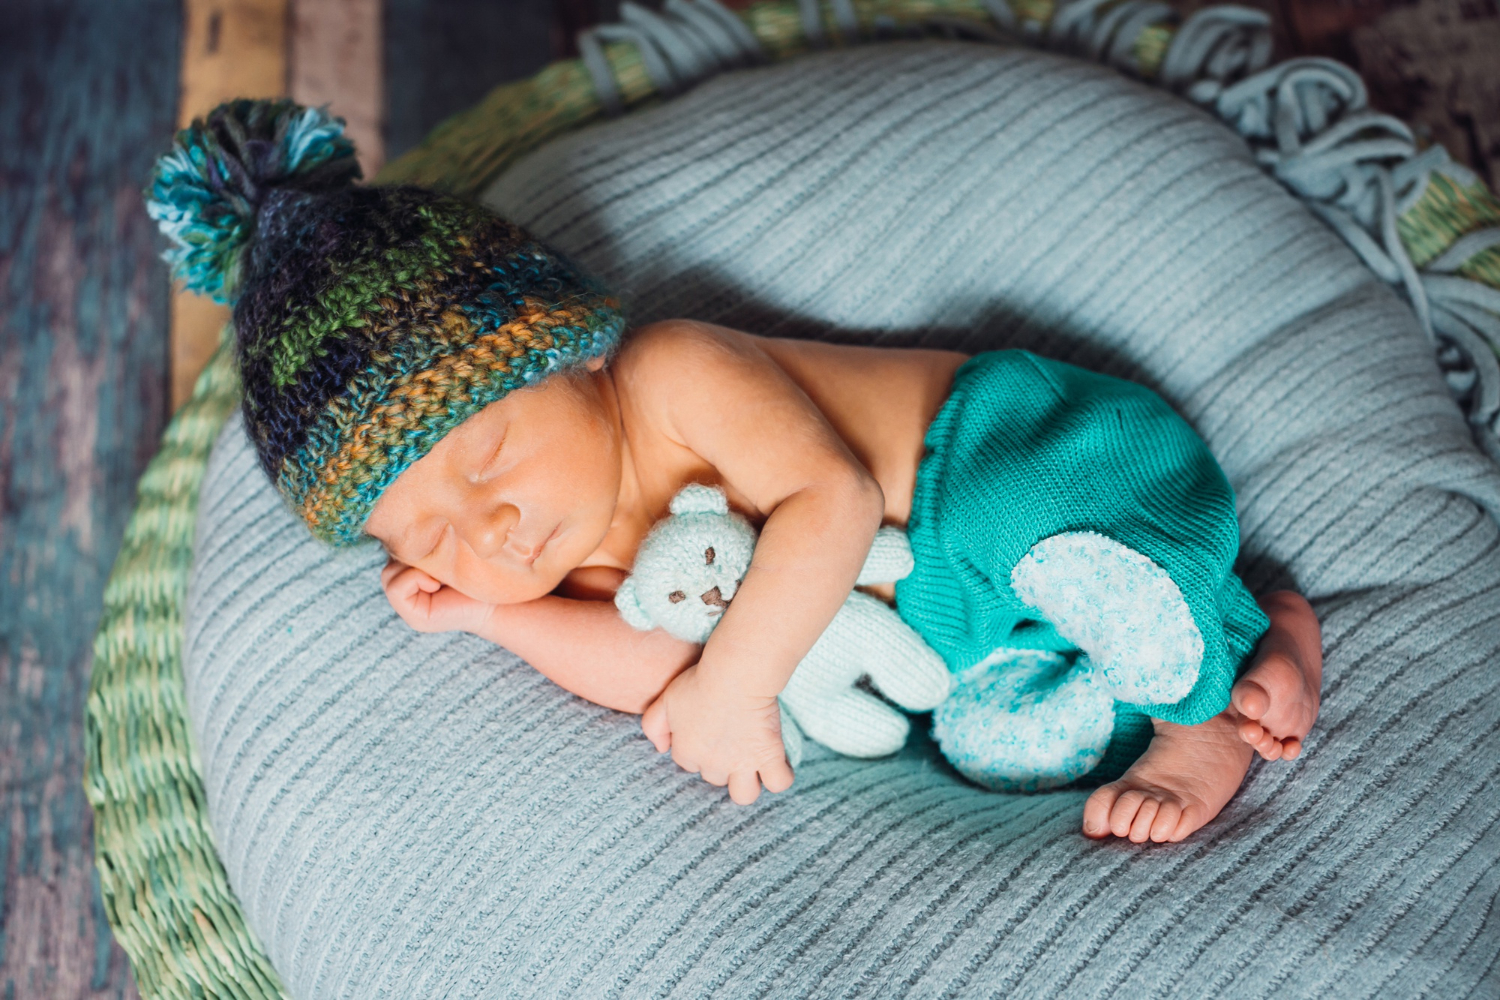  Sleeping newborn on a neck pillow, a cozy baby shower gift idea